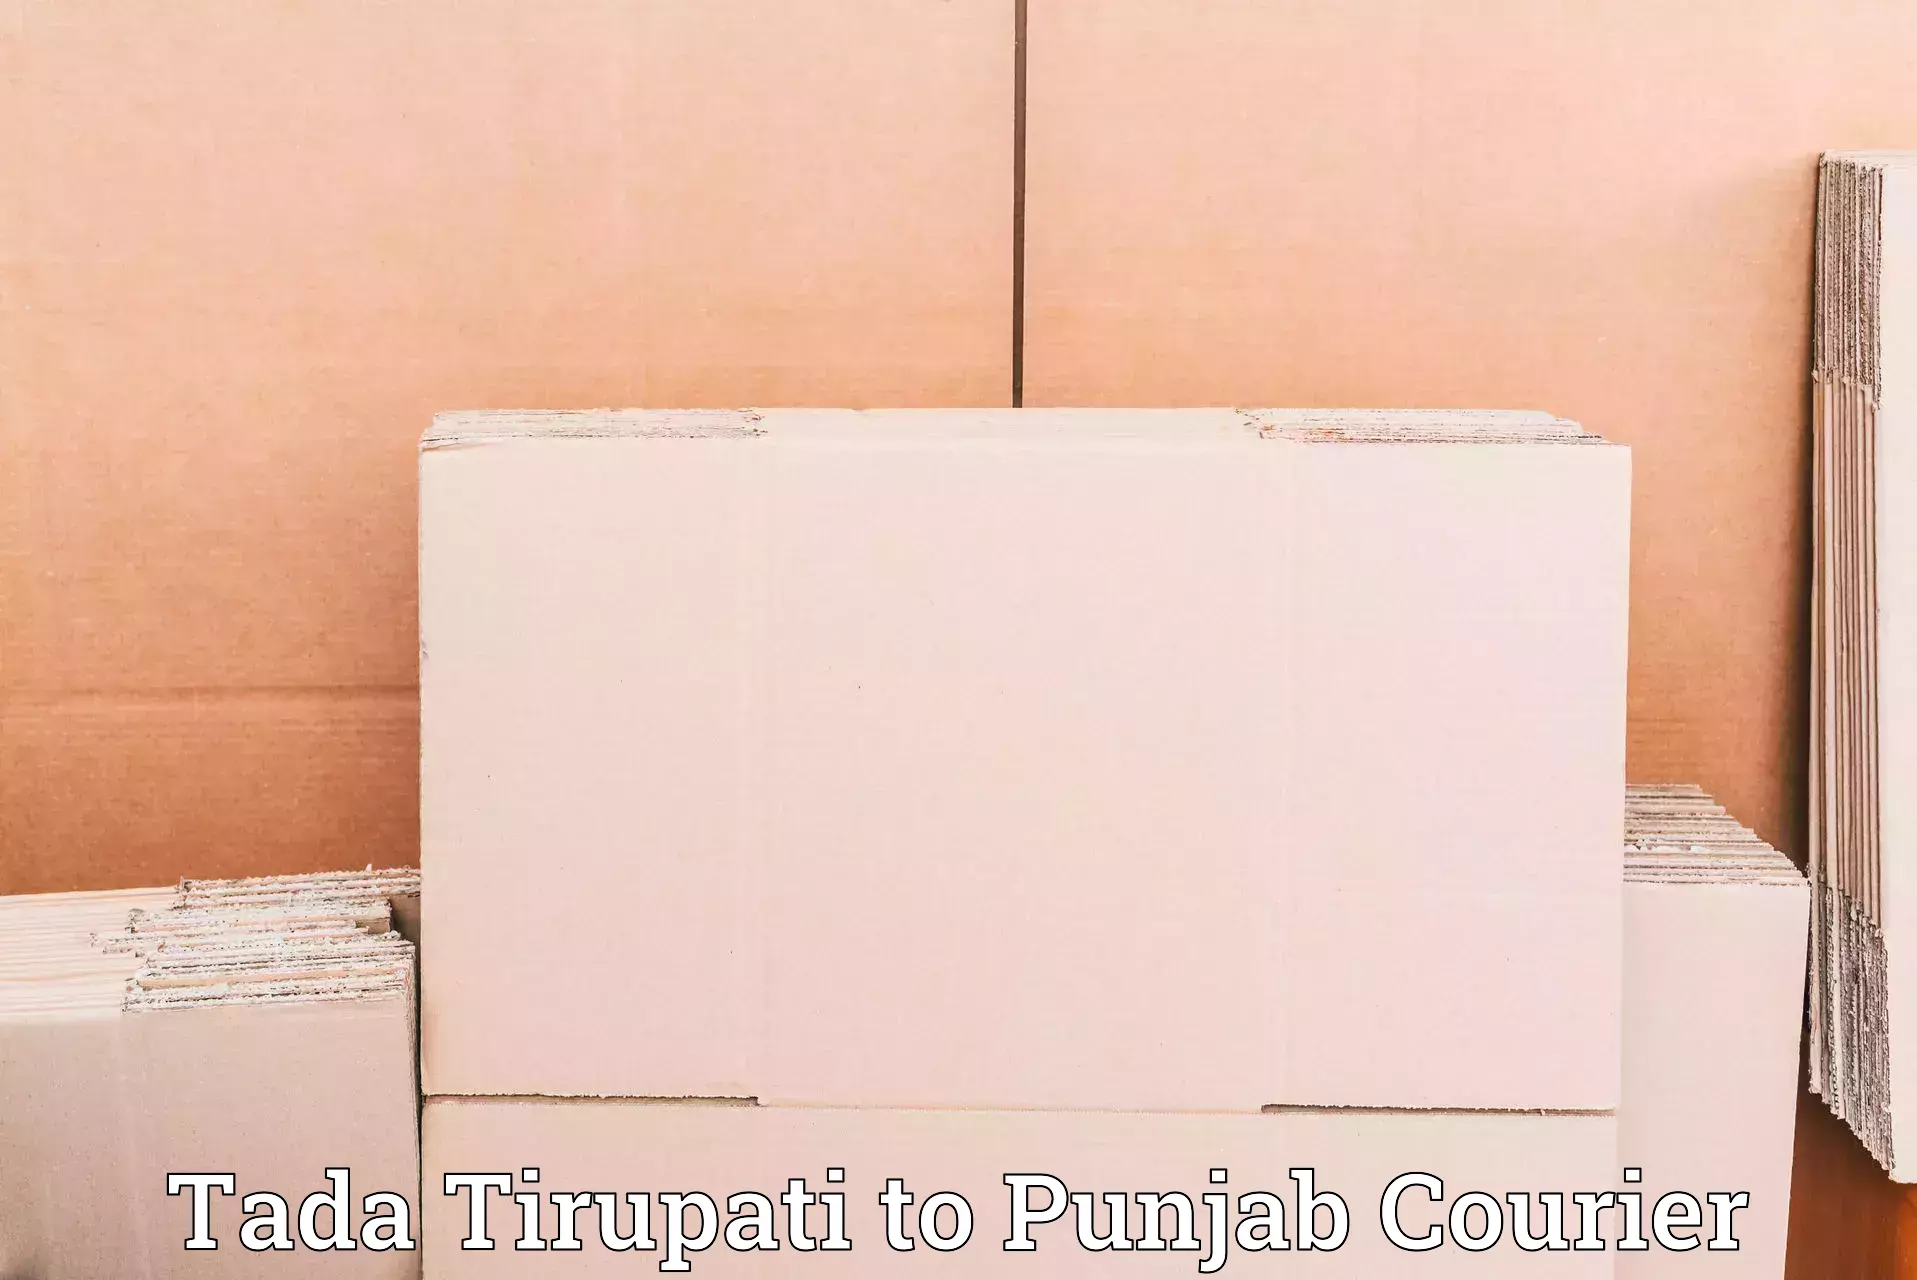 Customer-focused courier Tada Tirupati to Batala